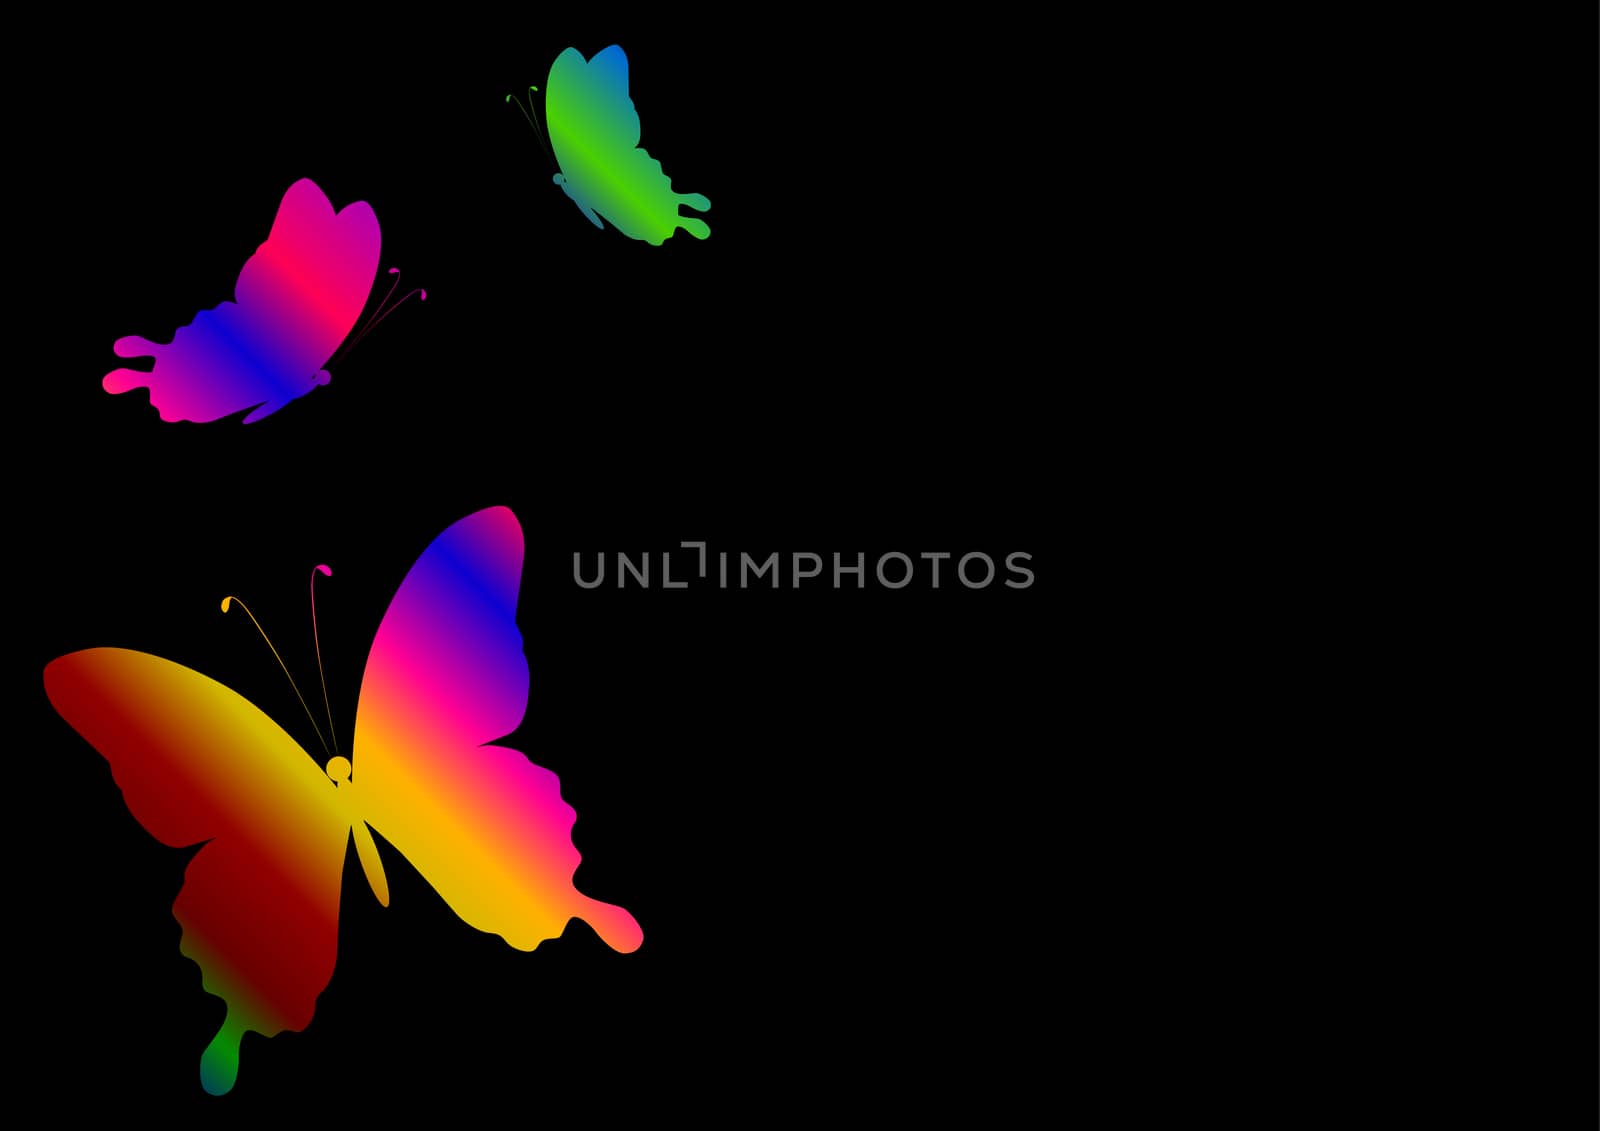 black background with a butterfly by rodakm